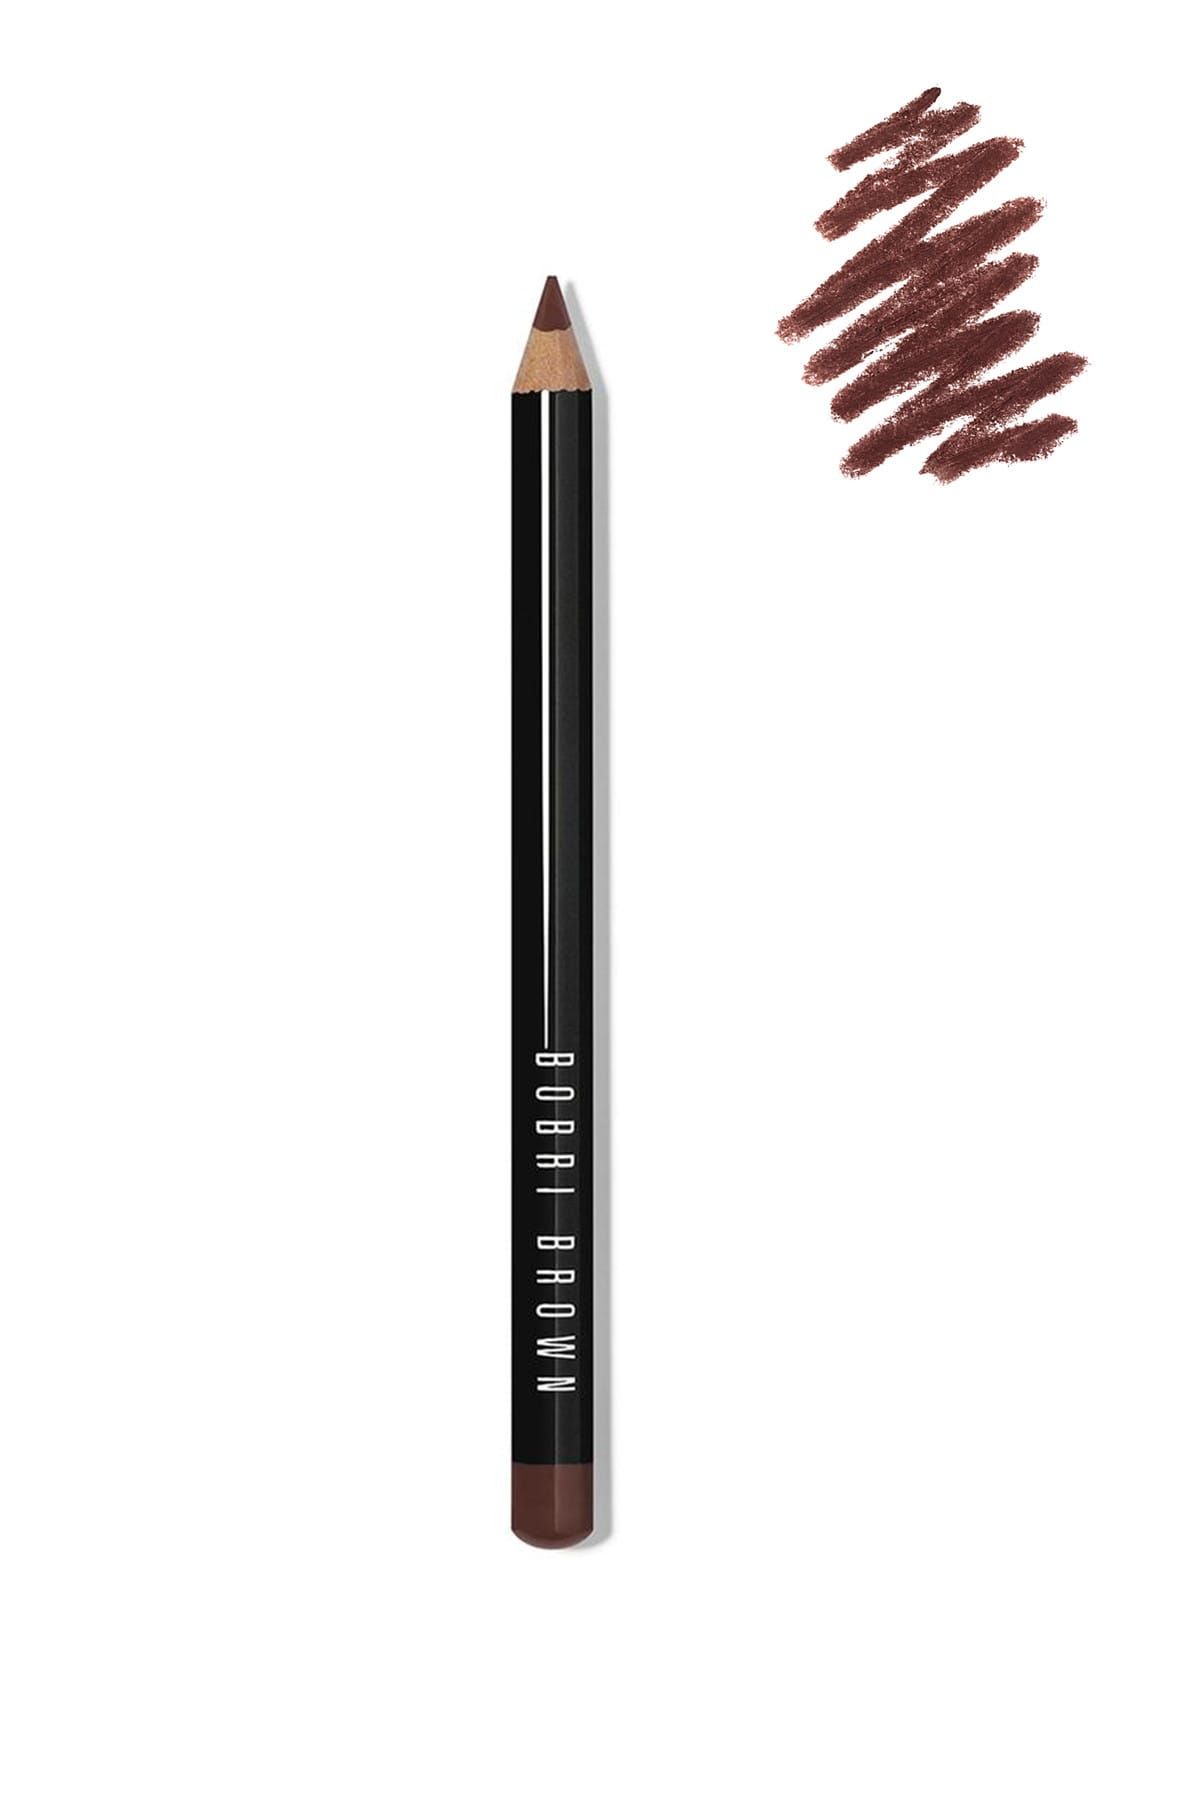 Bobbi Brown Lip Pencil / Dudak Kalemi Fh14 1.0 G Chocolate 716170141442